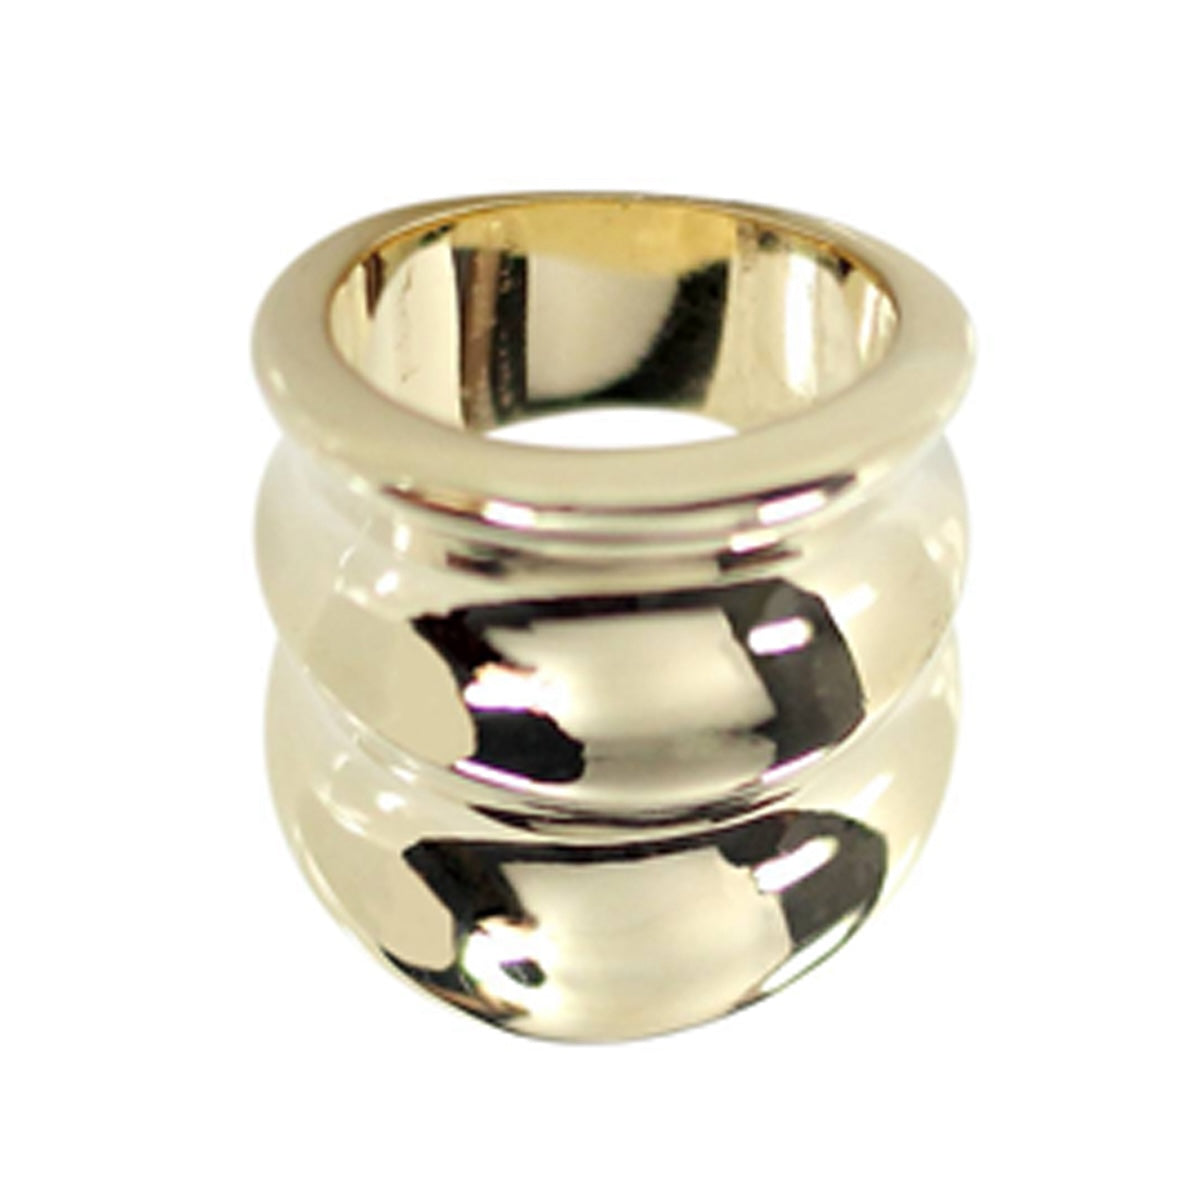 Bamboo-Inspired 14K Gold Ring